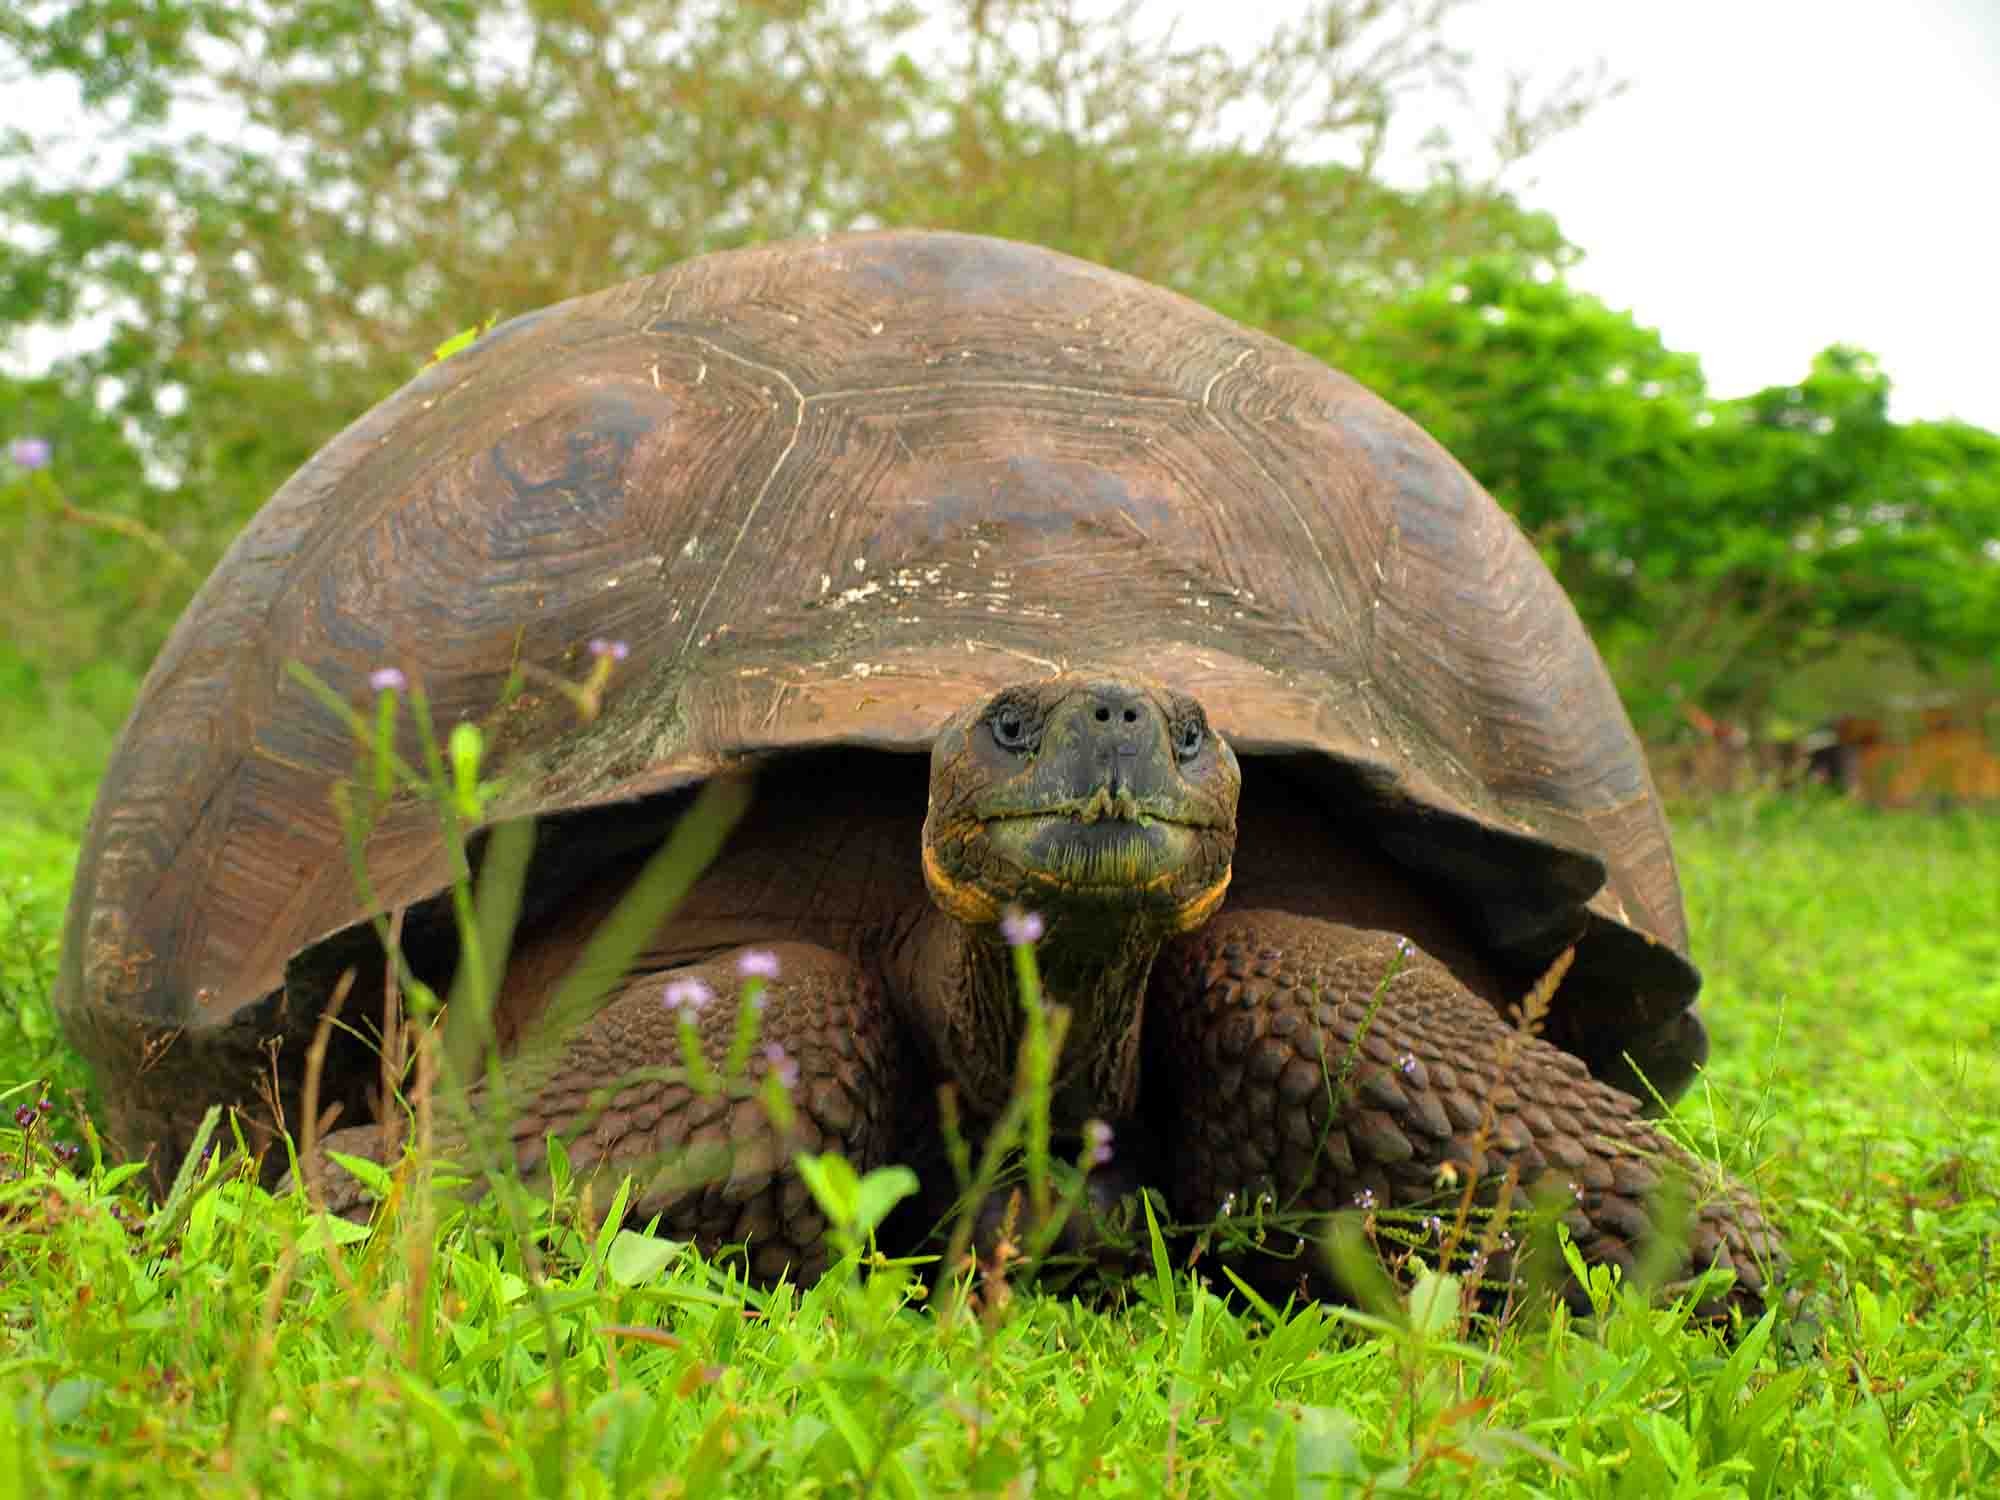 Tierras Altas de Santa Cruz | Giant tortoise | Galapagos Islands | South America Travel